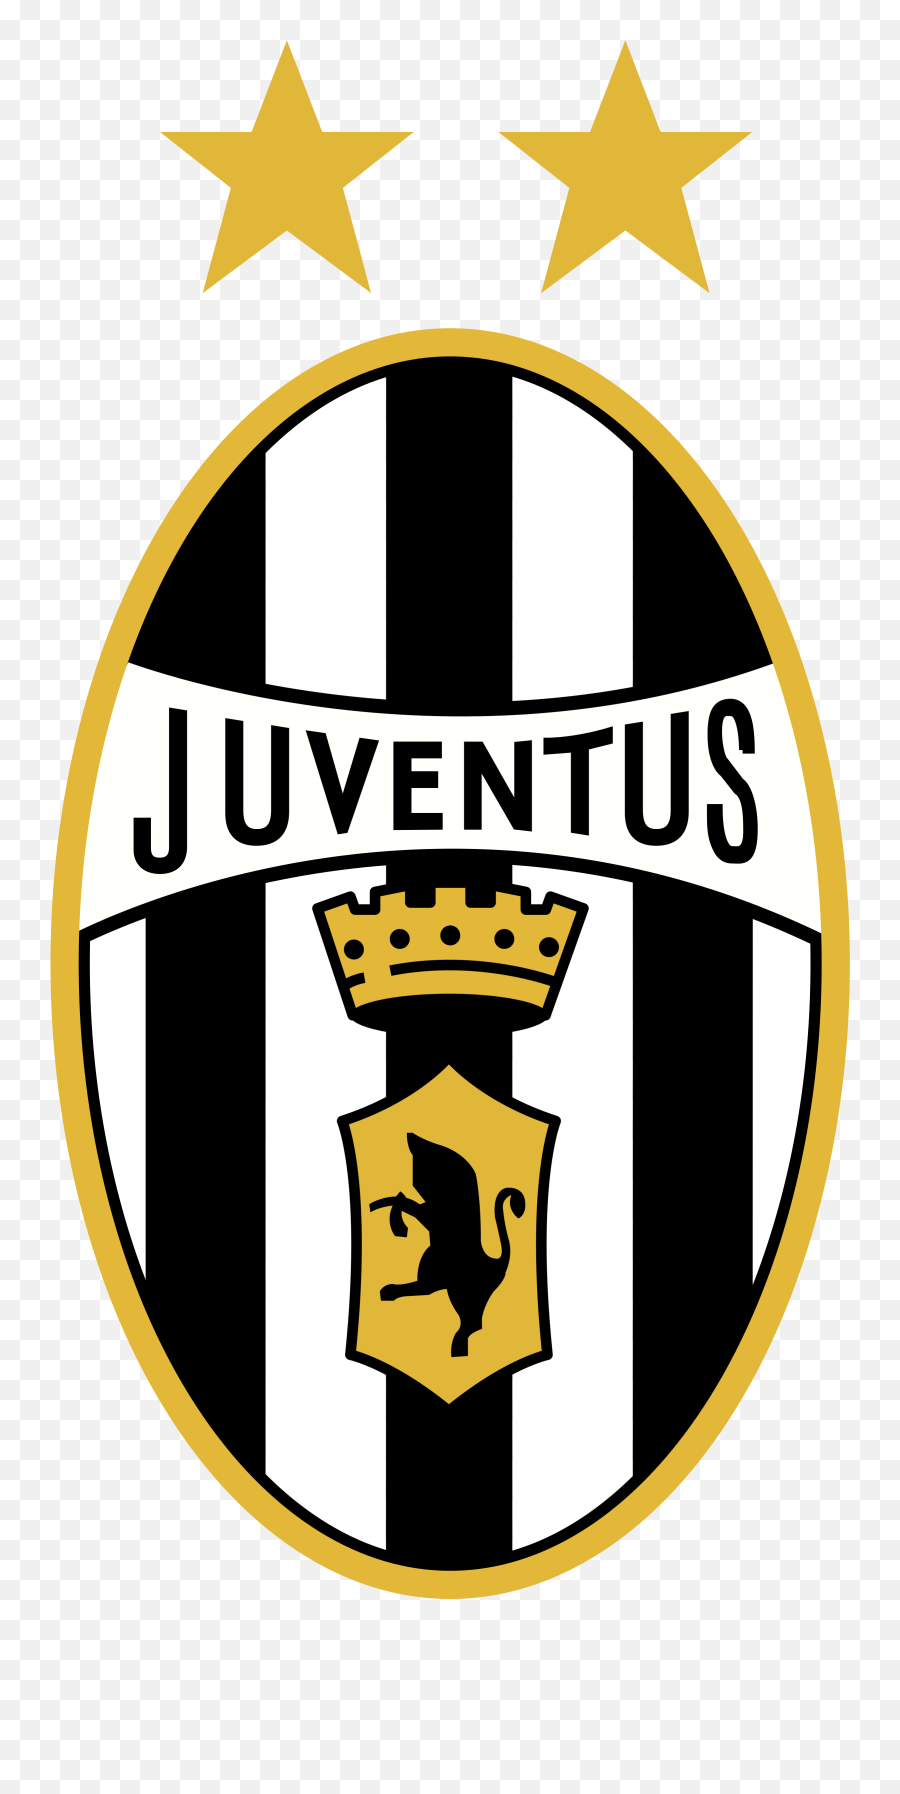 Juventus Logo Png Transparent U0026 Svg Vector - Freebie Supply Juventus,Jeep Vector Logo